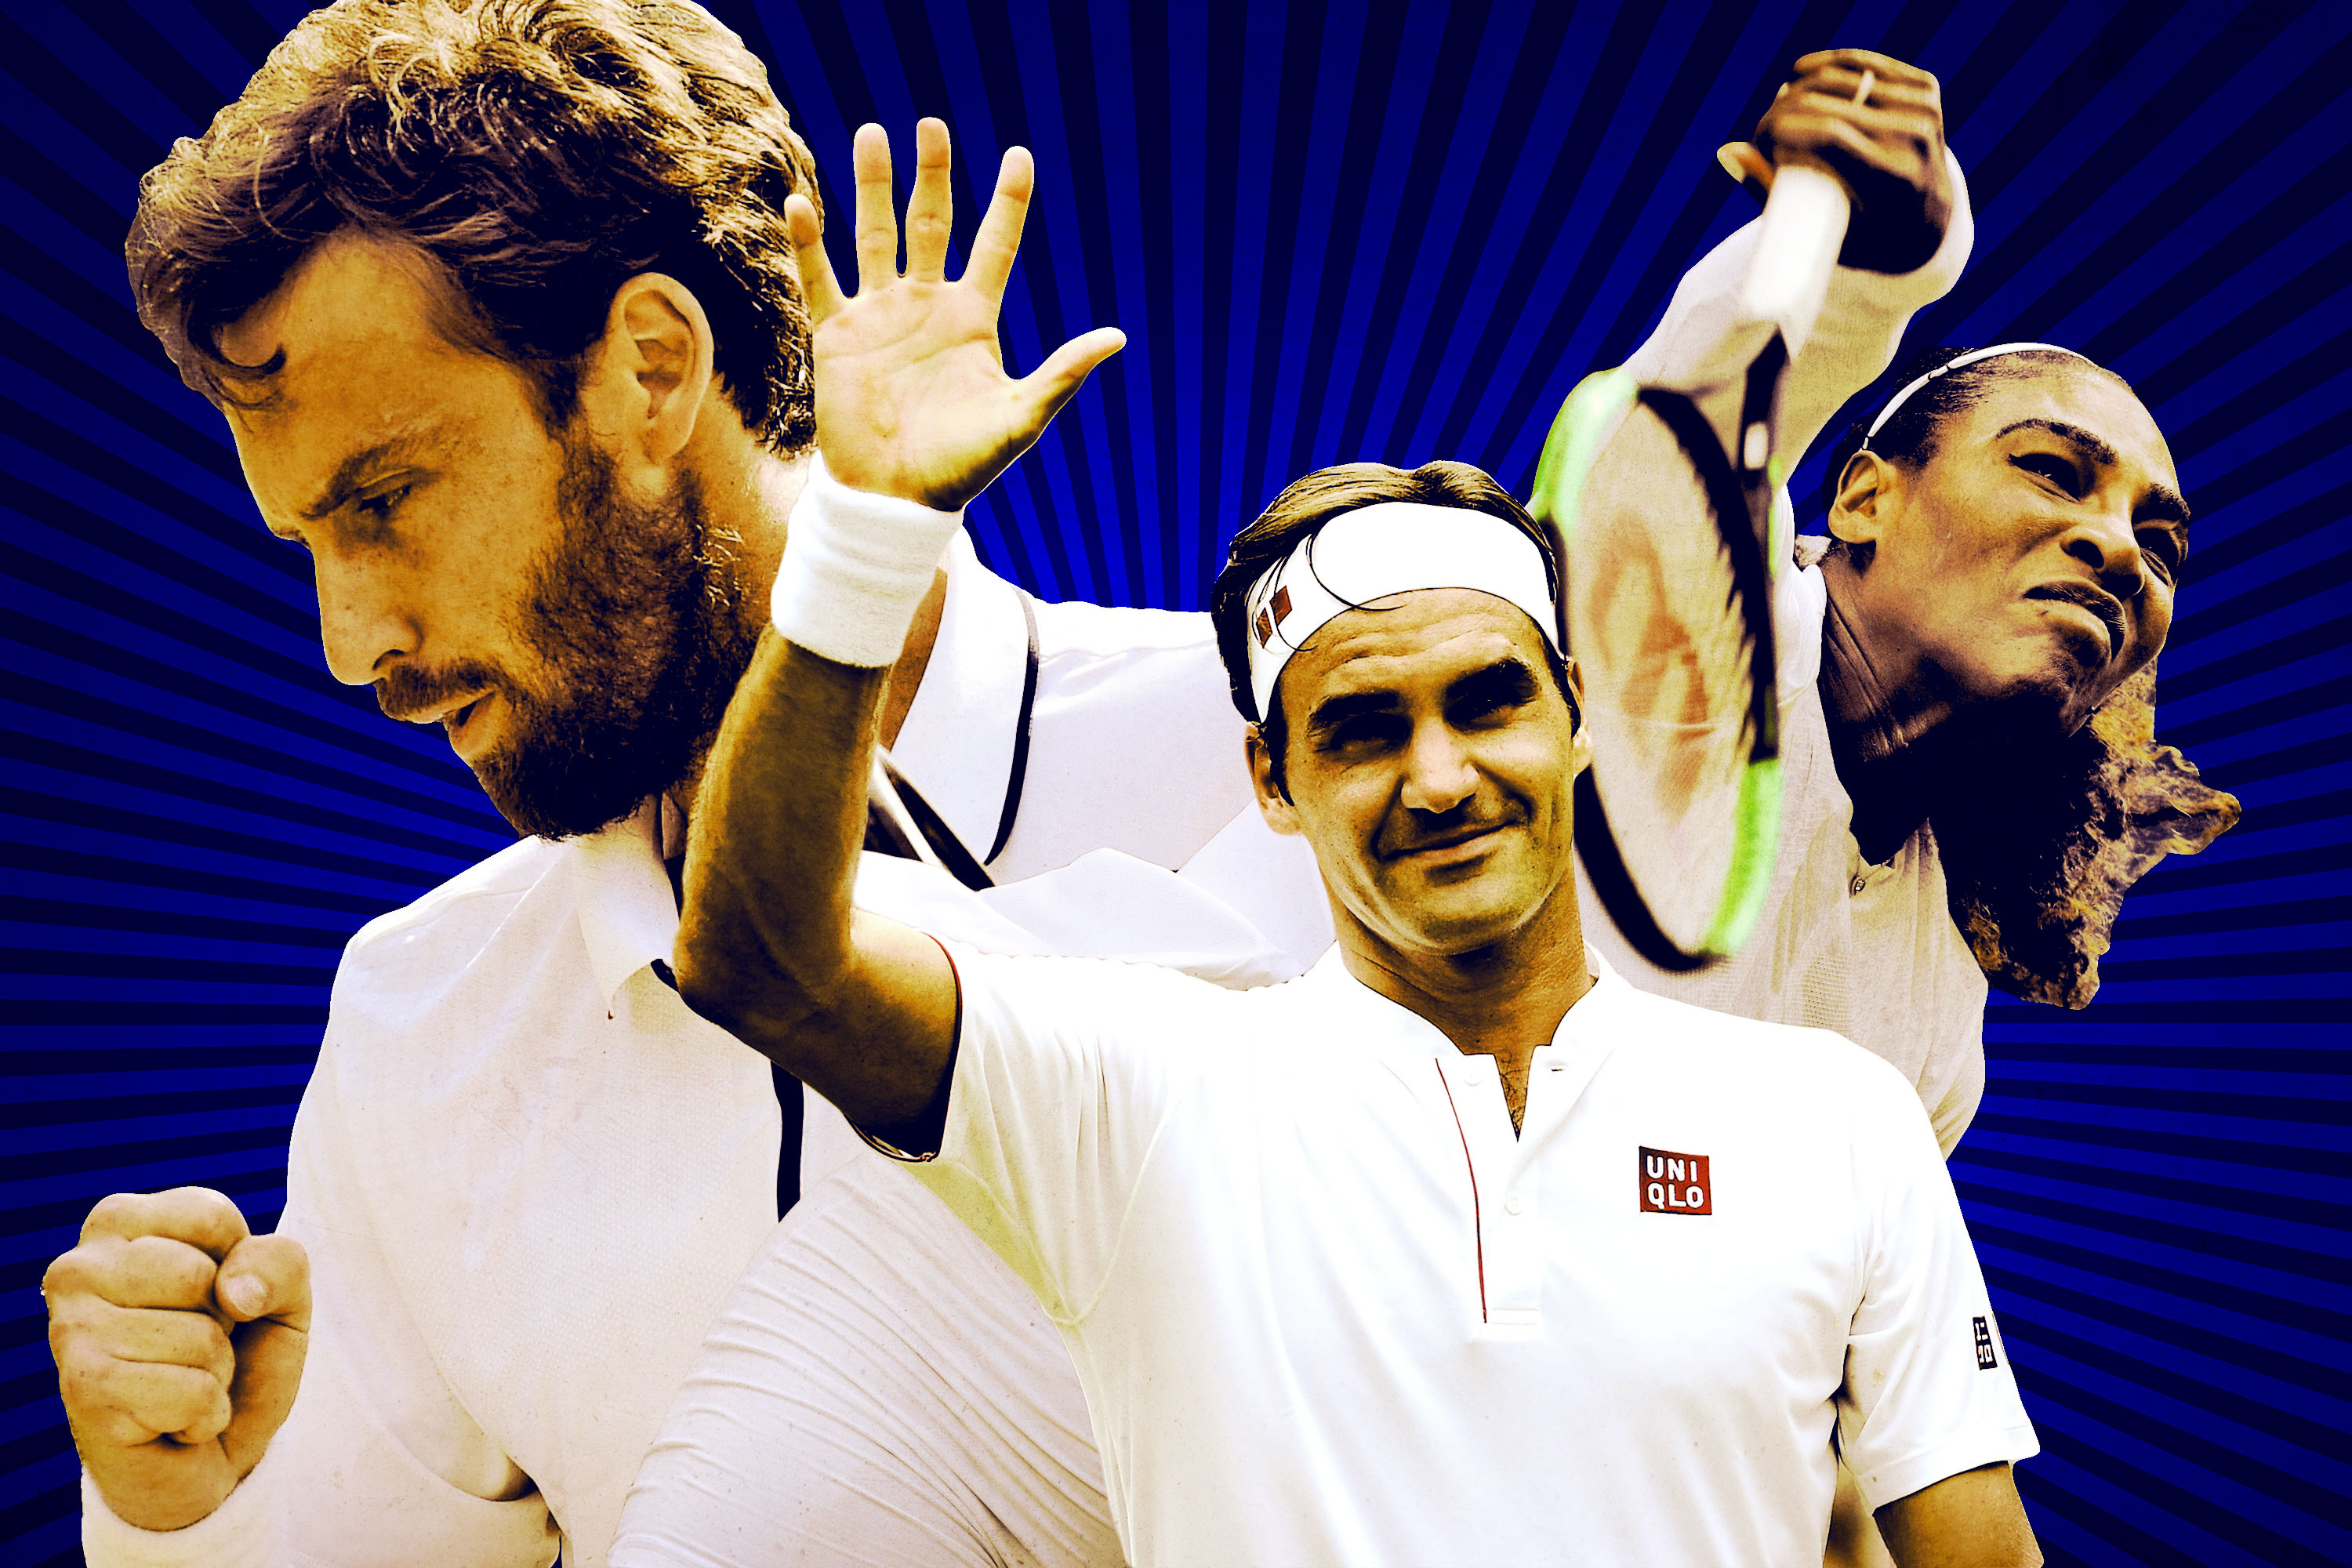 Roger Federer, Serena Williams, and Ernests Gulbis